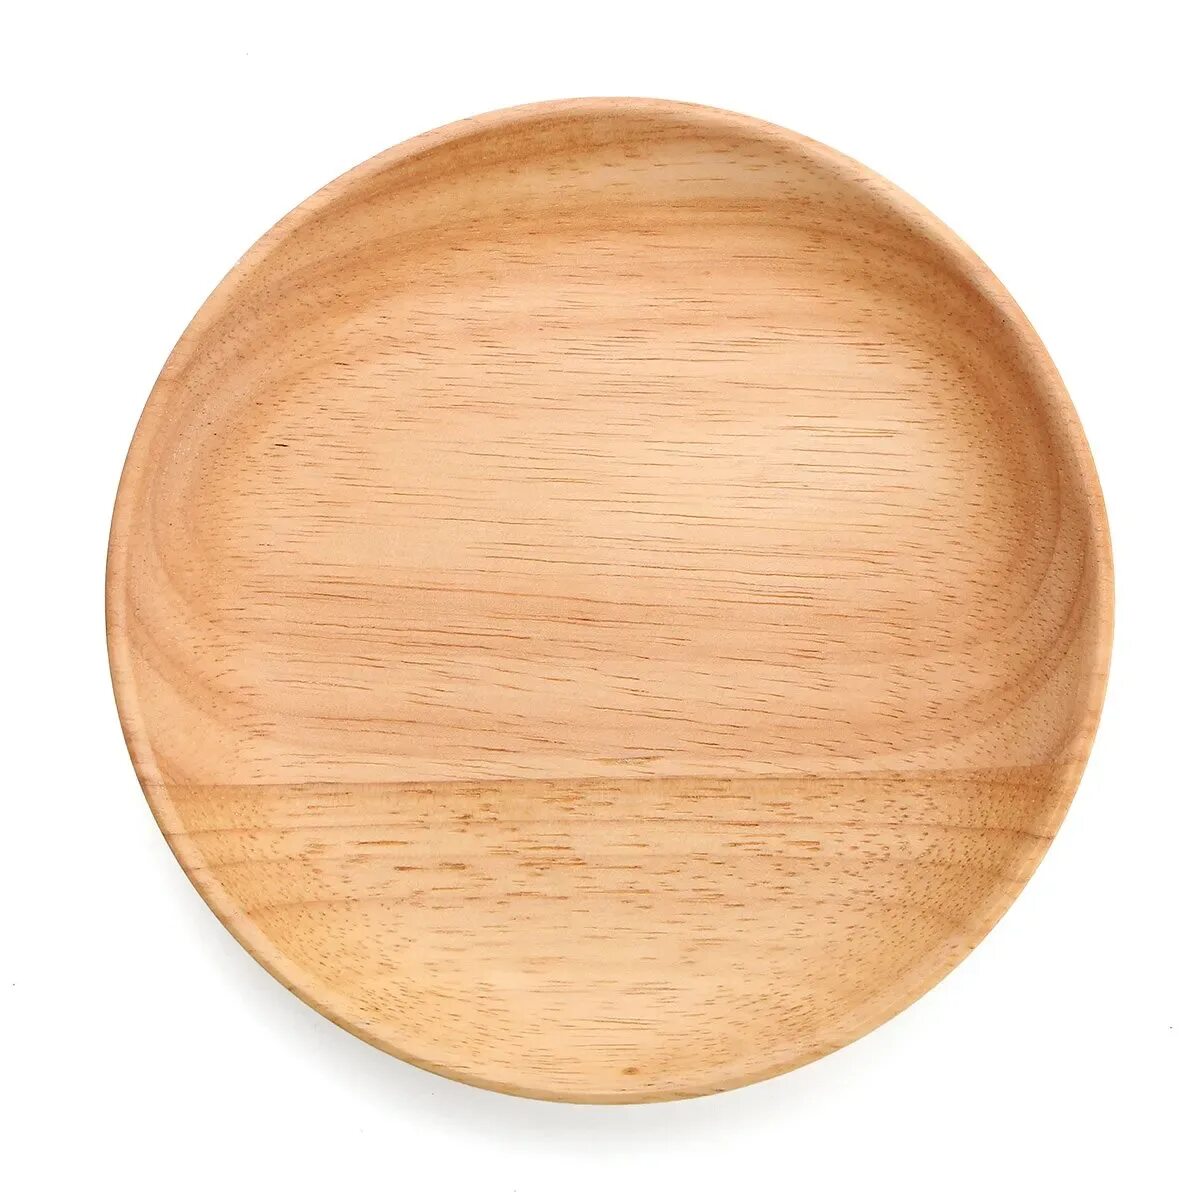 Round plate. Деревянная тарелка. Круглая деревянная тарелка. Деревянная тарелка квадратная. Круглая деревянная доска.